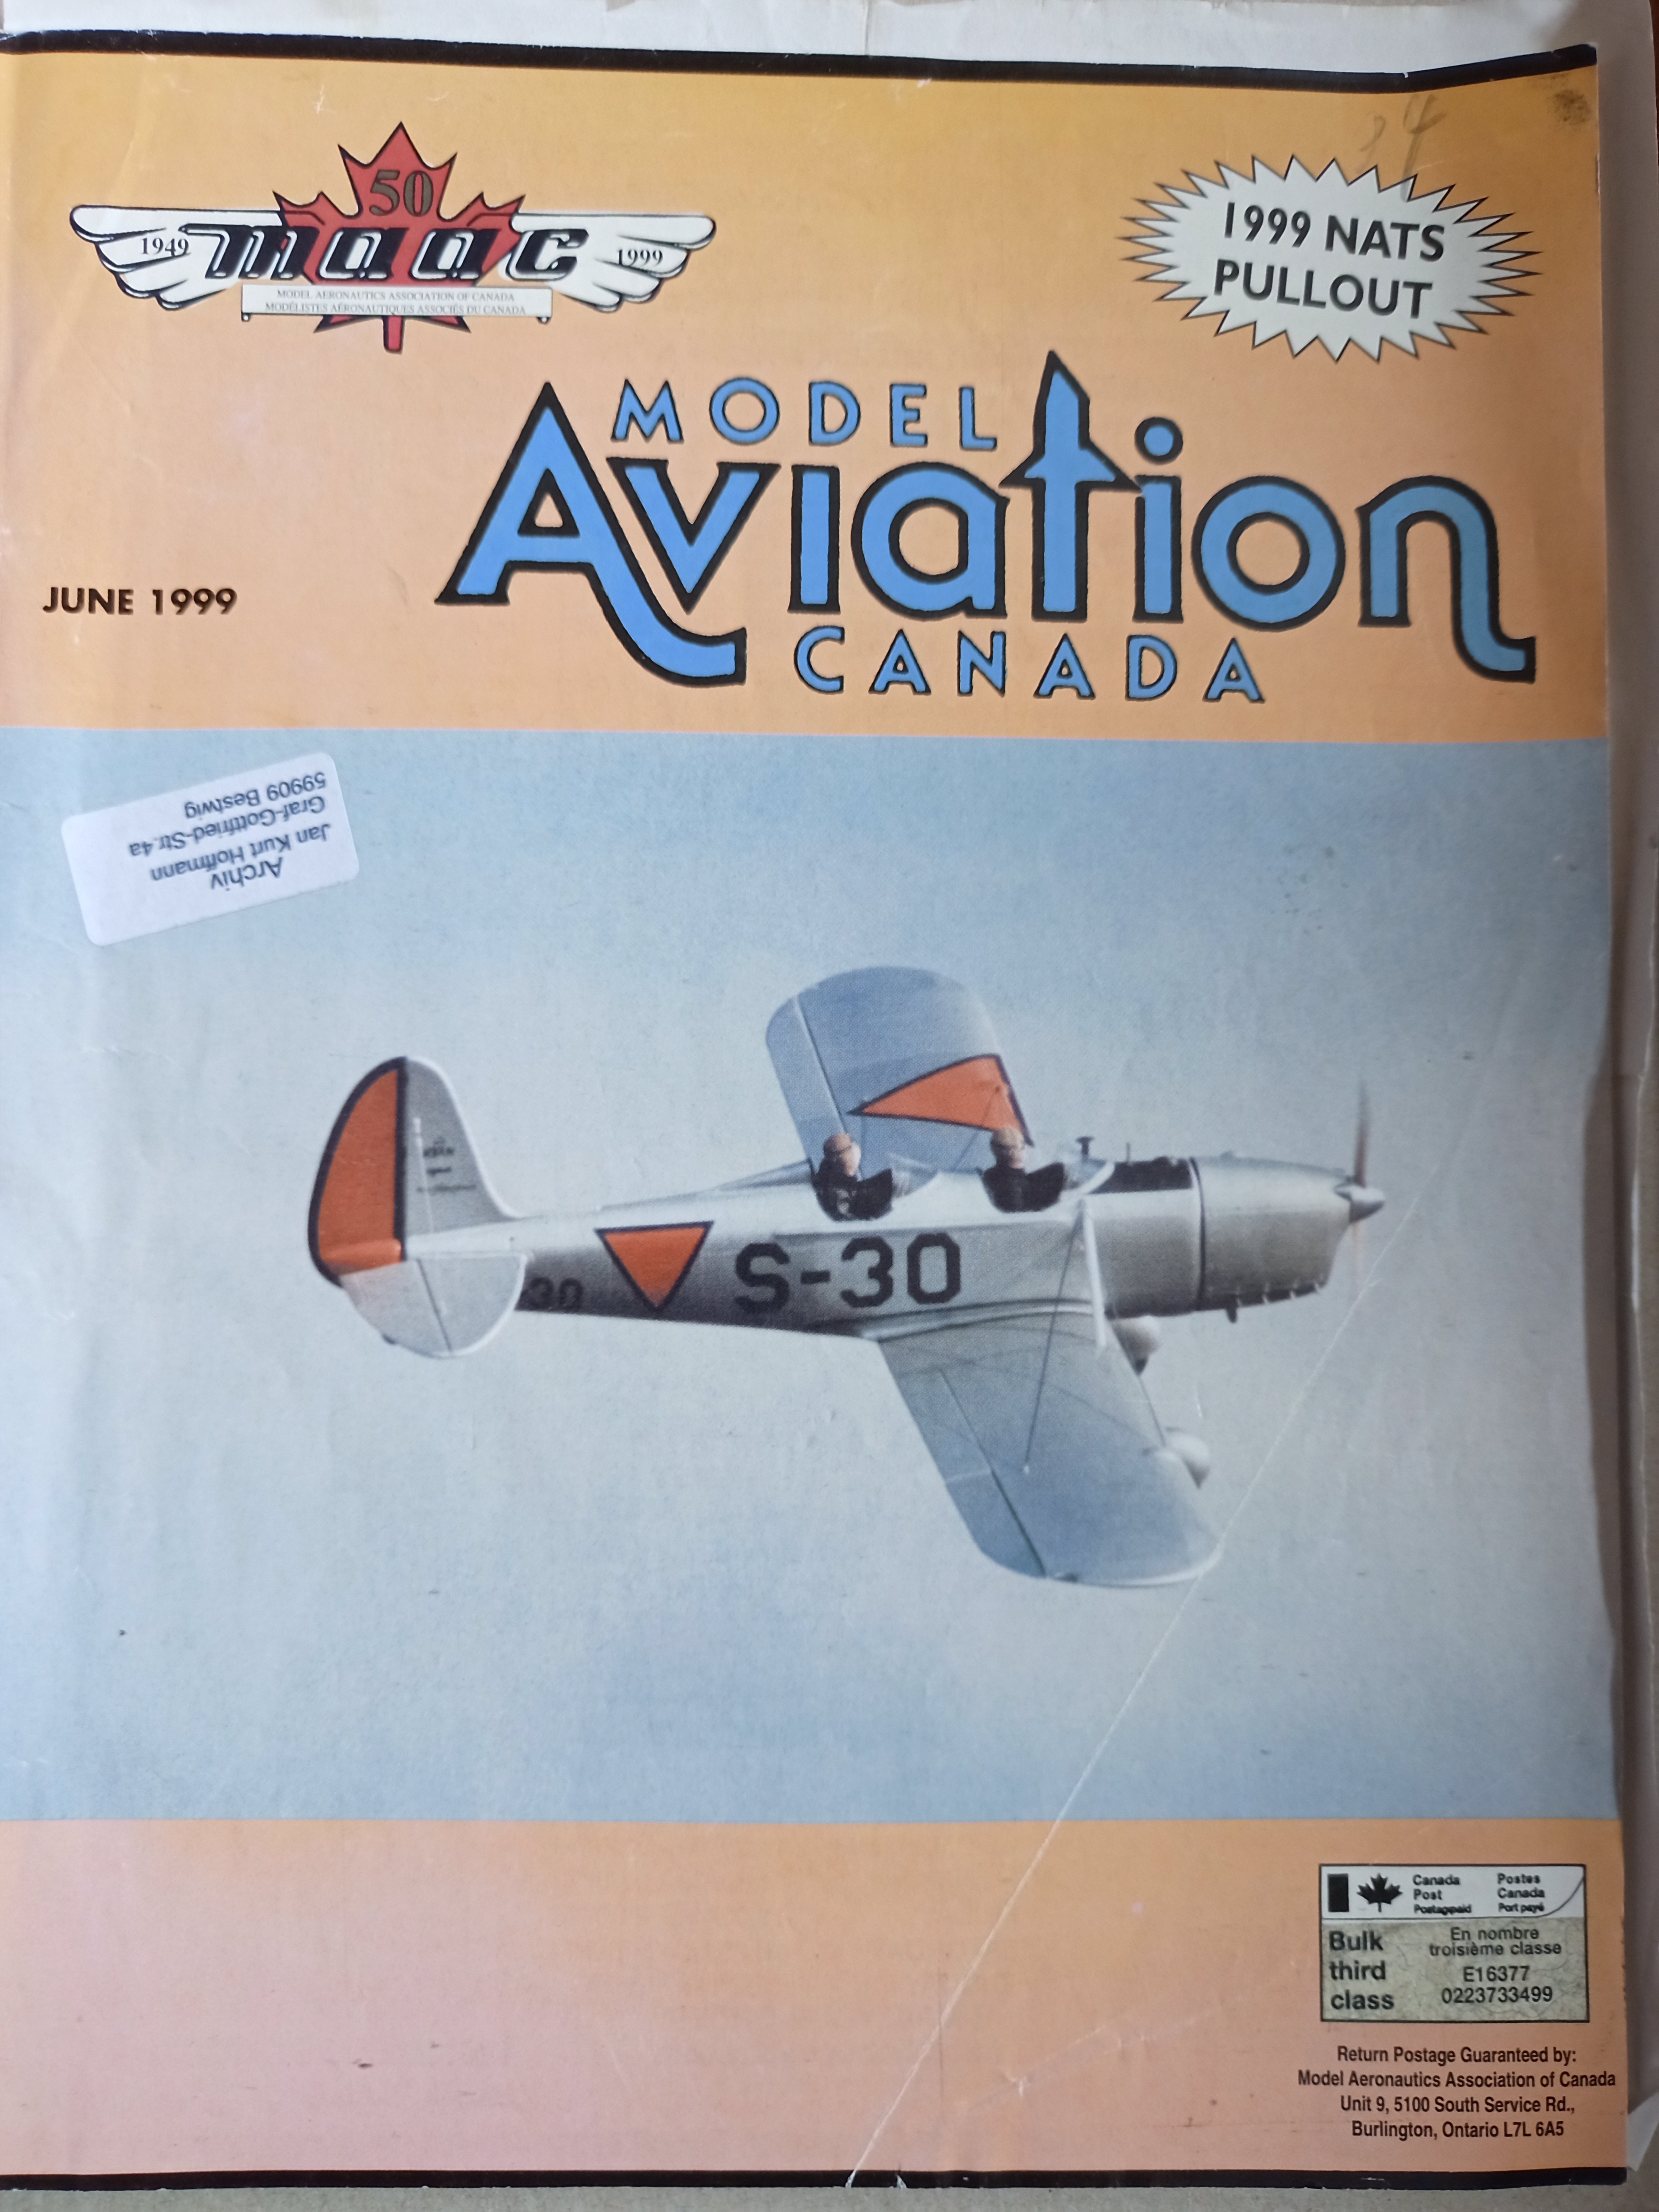 Model Aviation Canada (Deutsches Segelflugmuseum mit Modellflug CC BY-NC-SA)